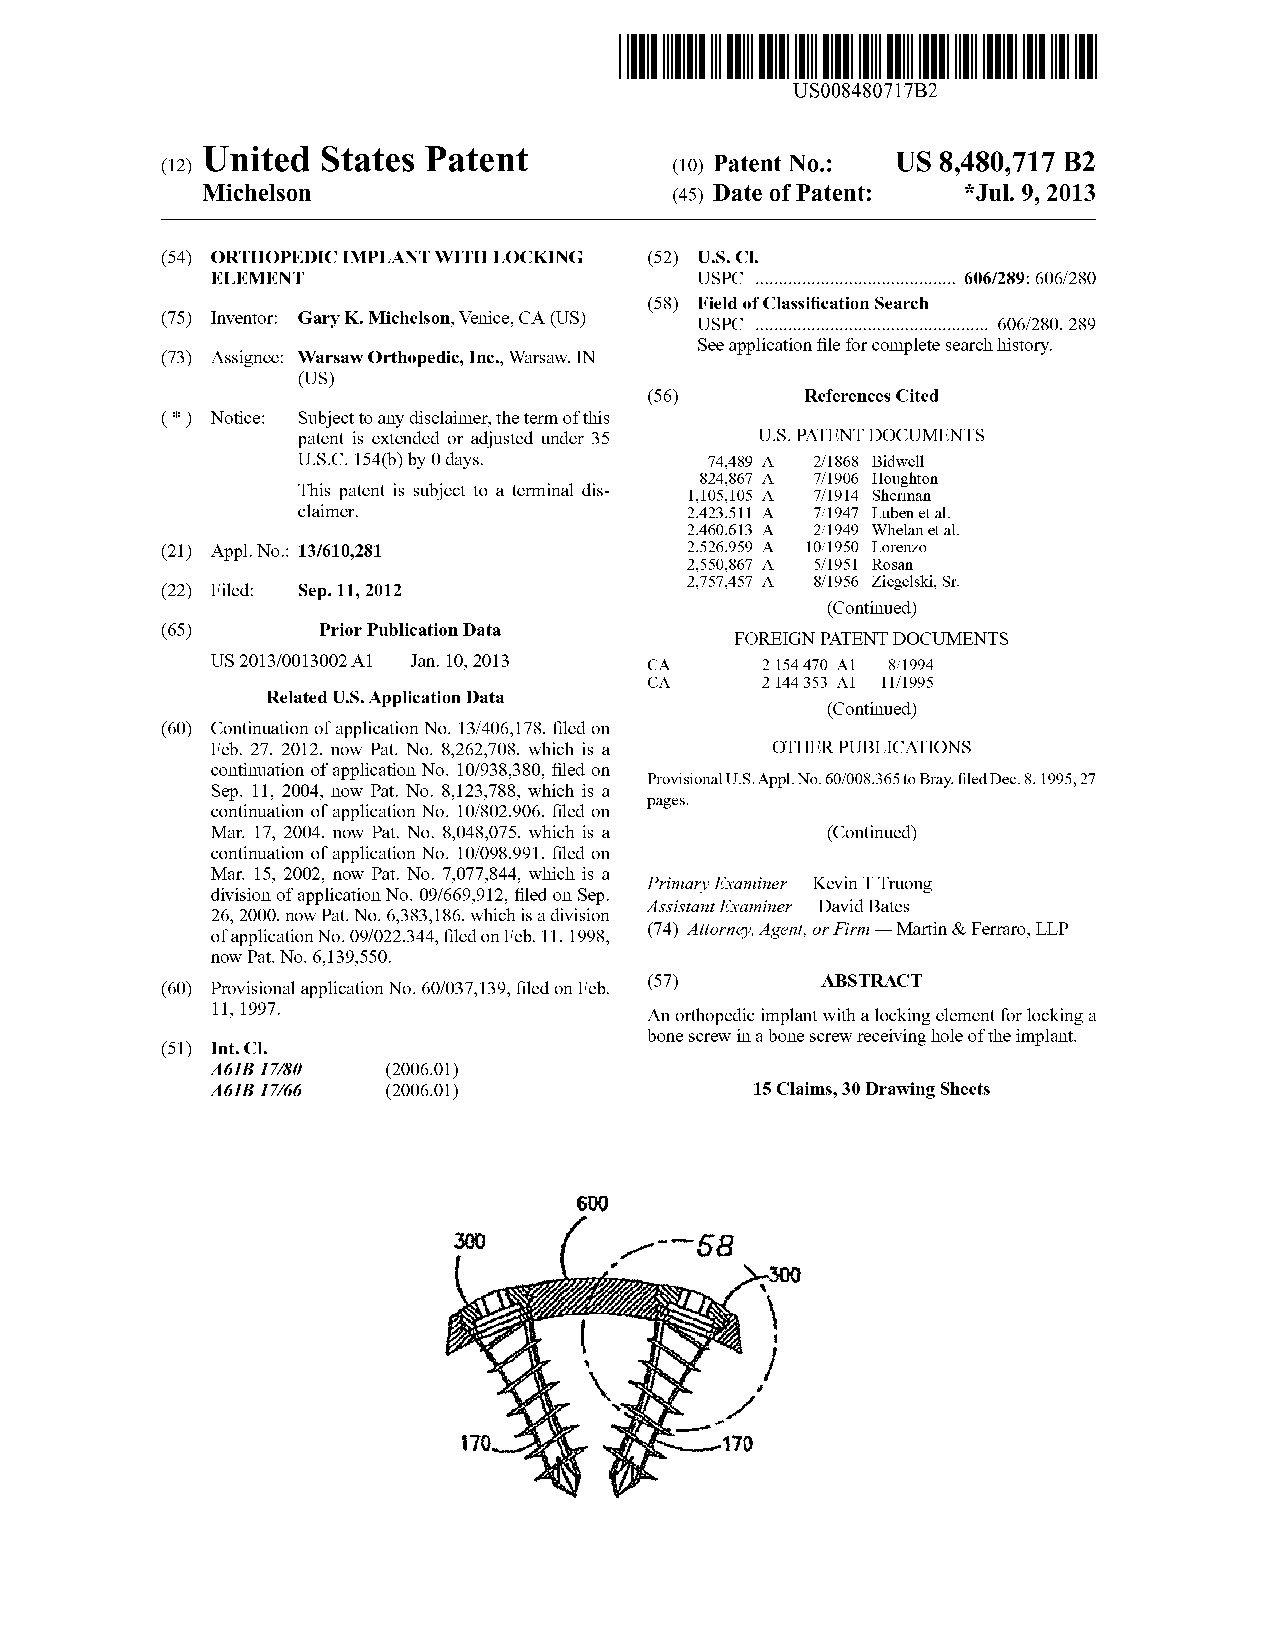 Orthopedic implant with locking element - Patent 8,480,717